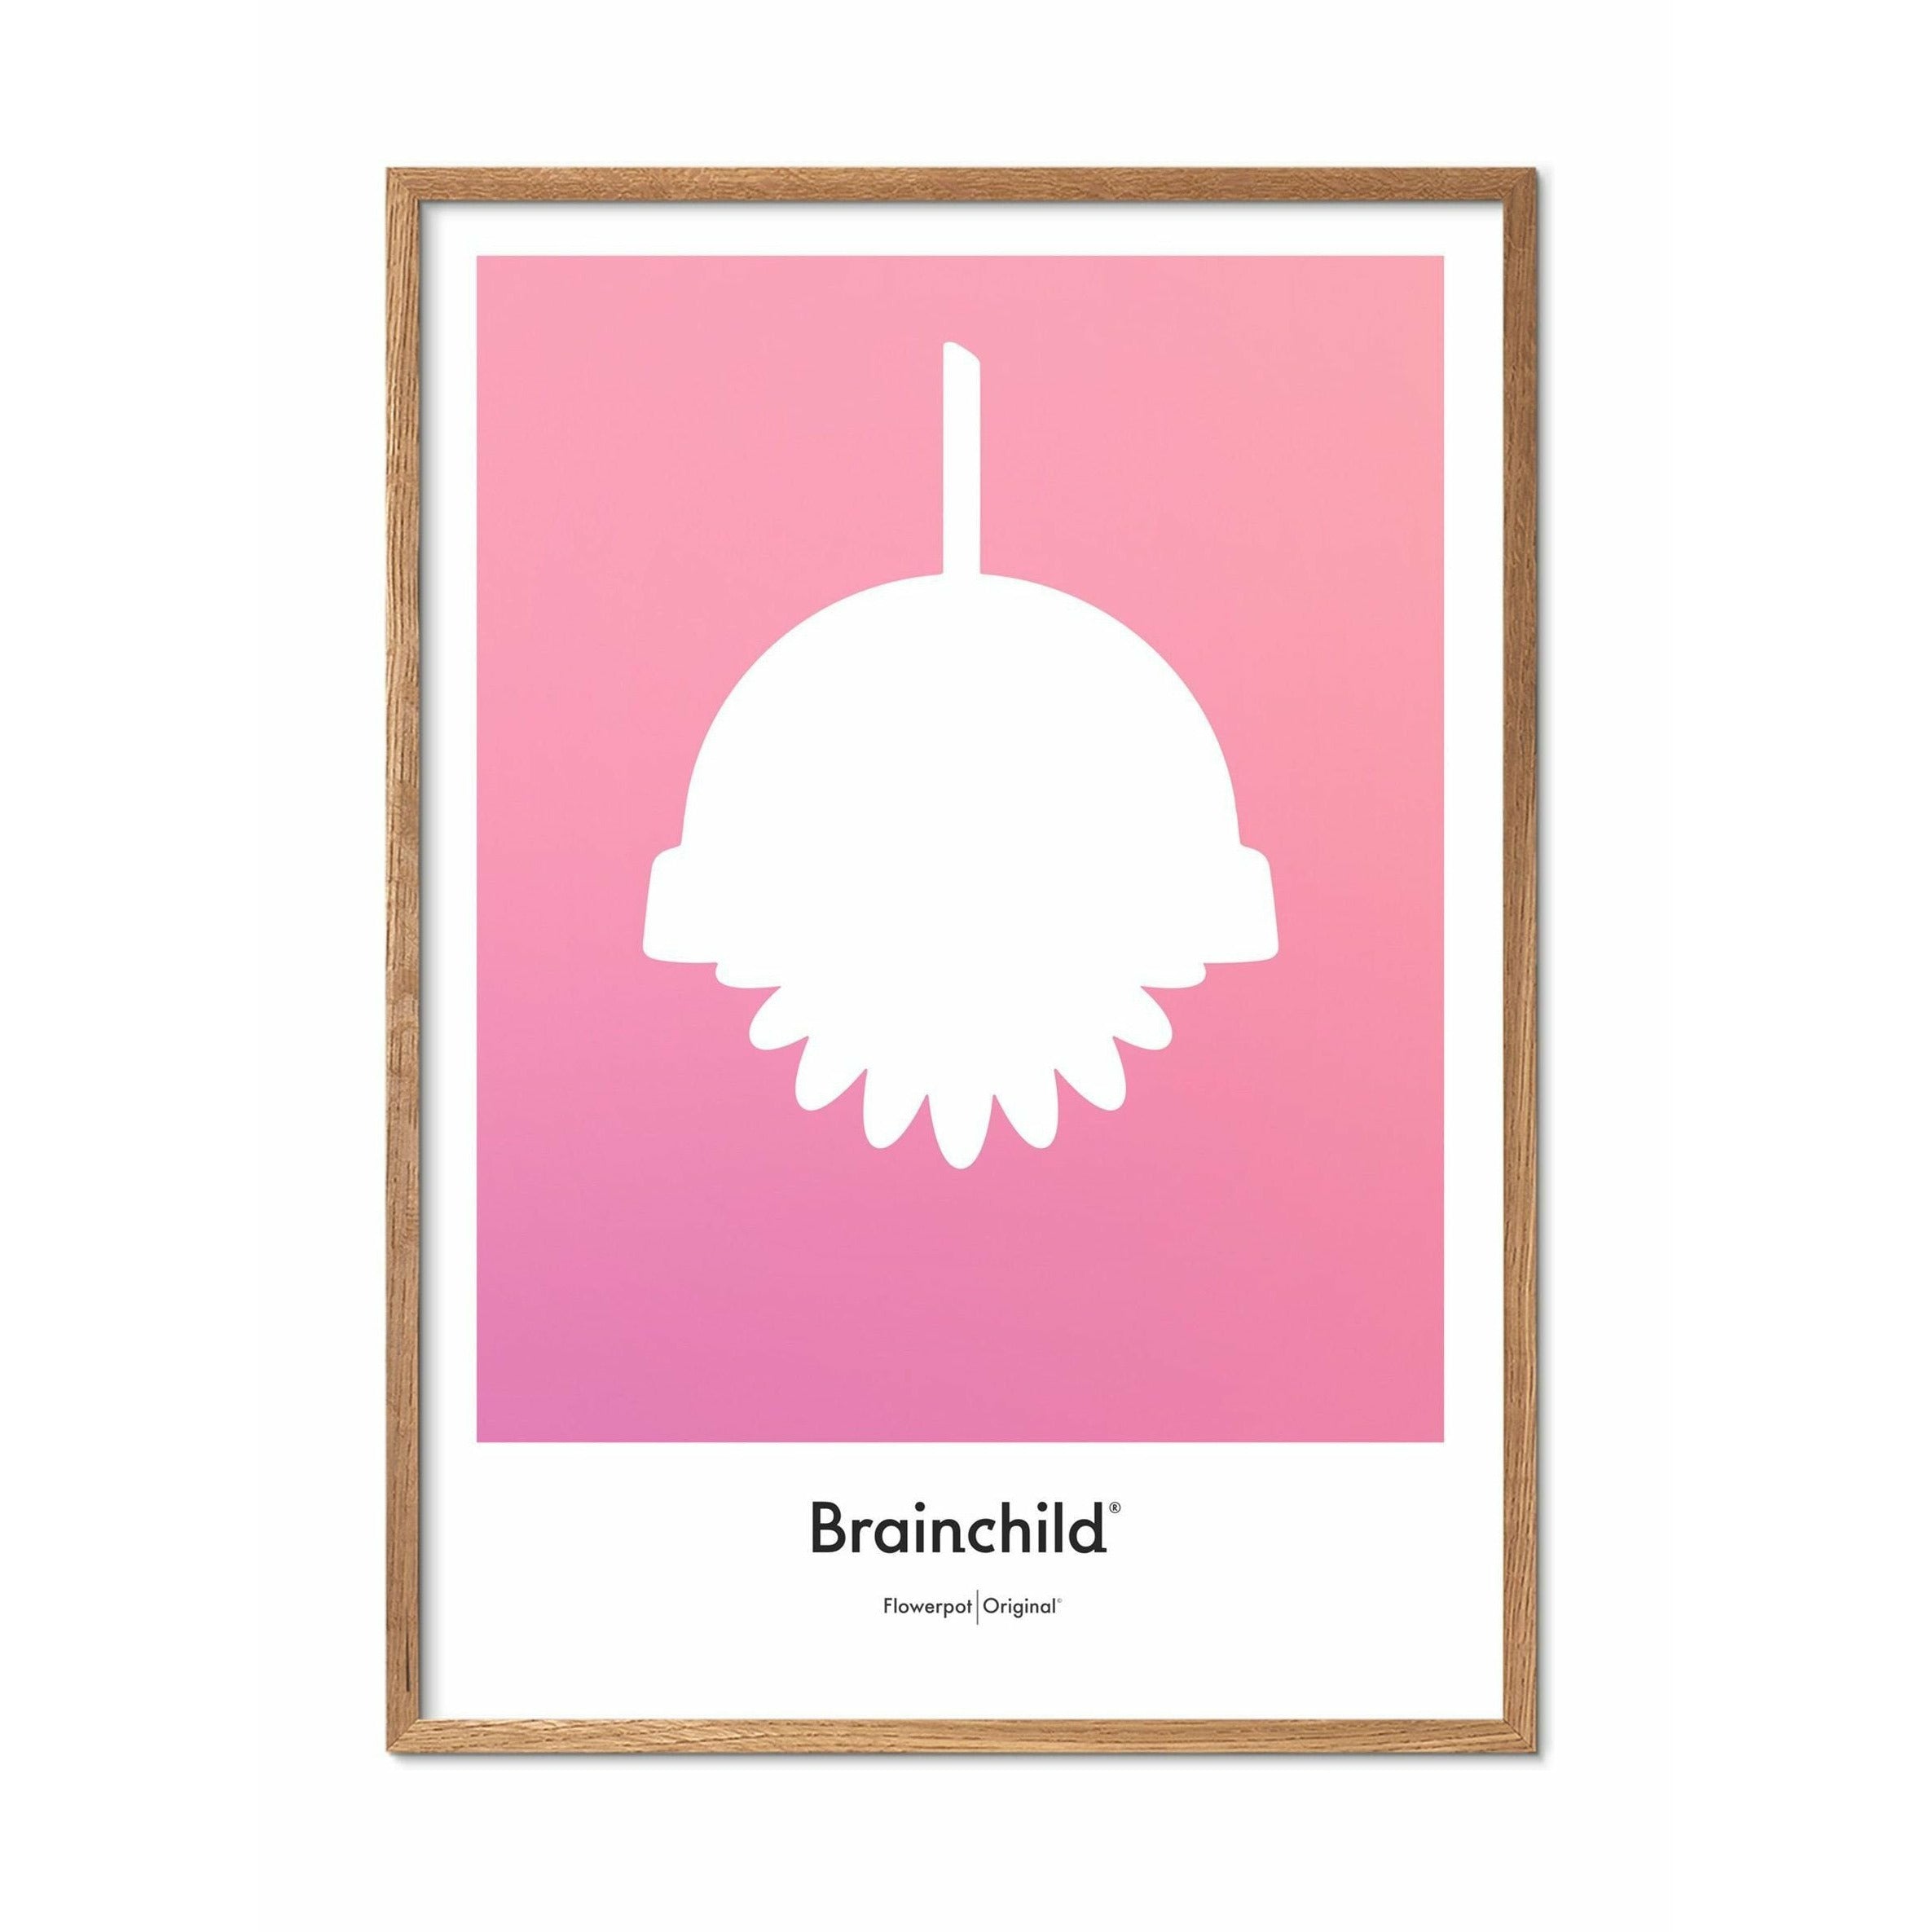 Brainchild Flowerpot Designikon Plakat, Ramme I Lyst Træ 50X70 Cm, Rosa